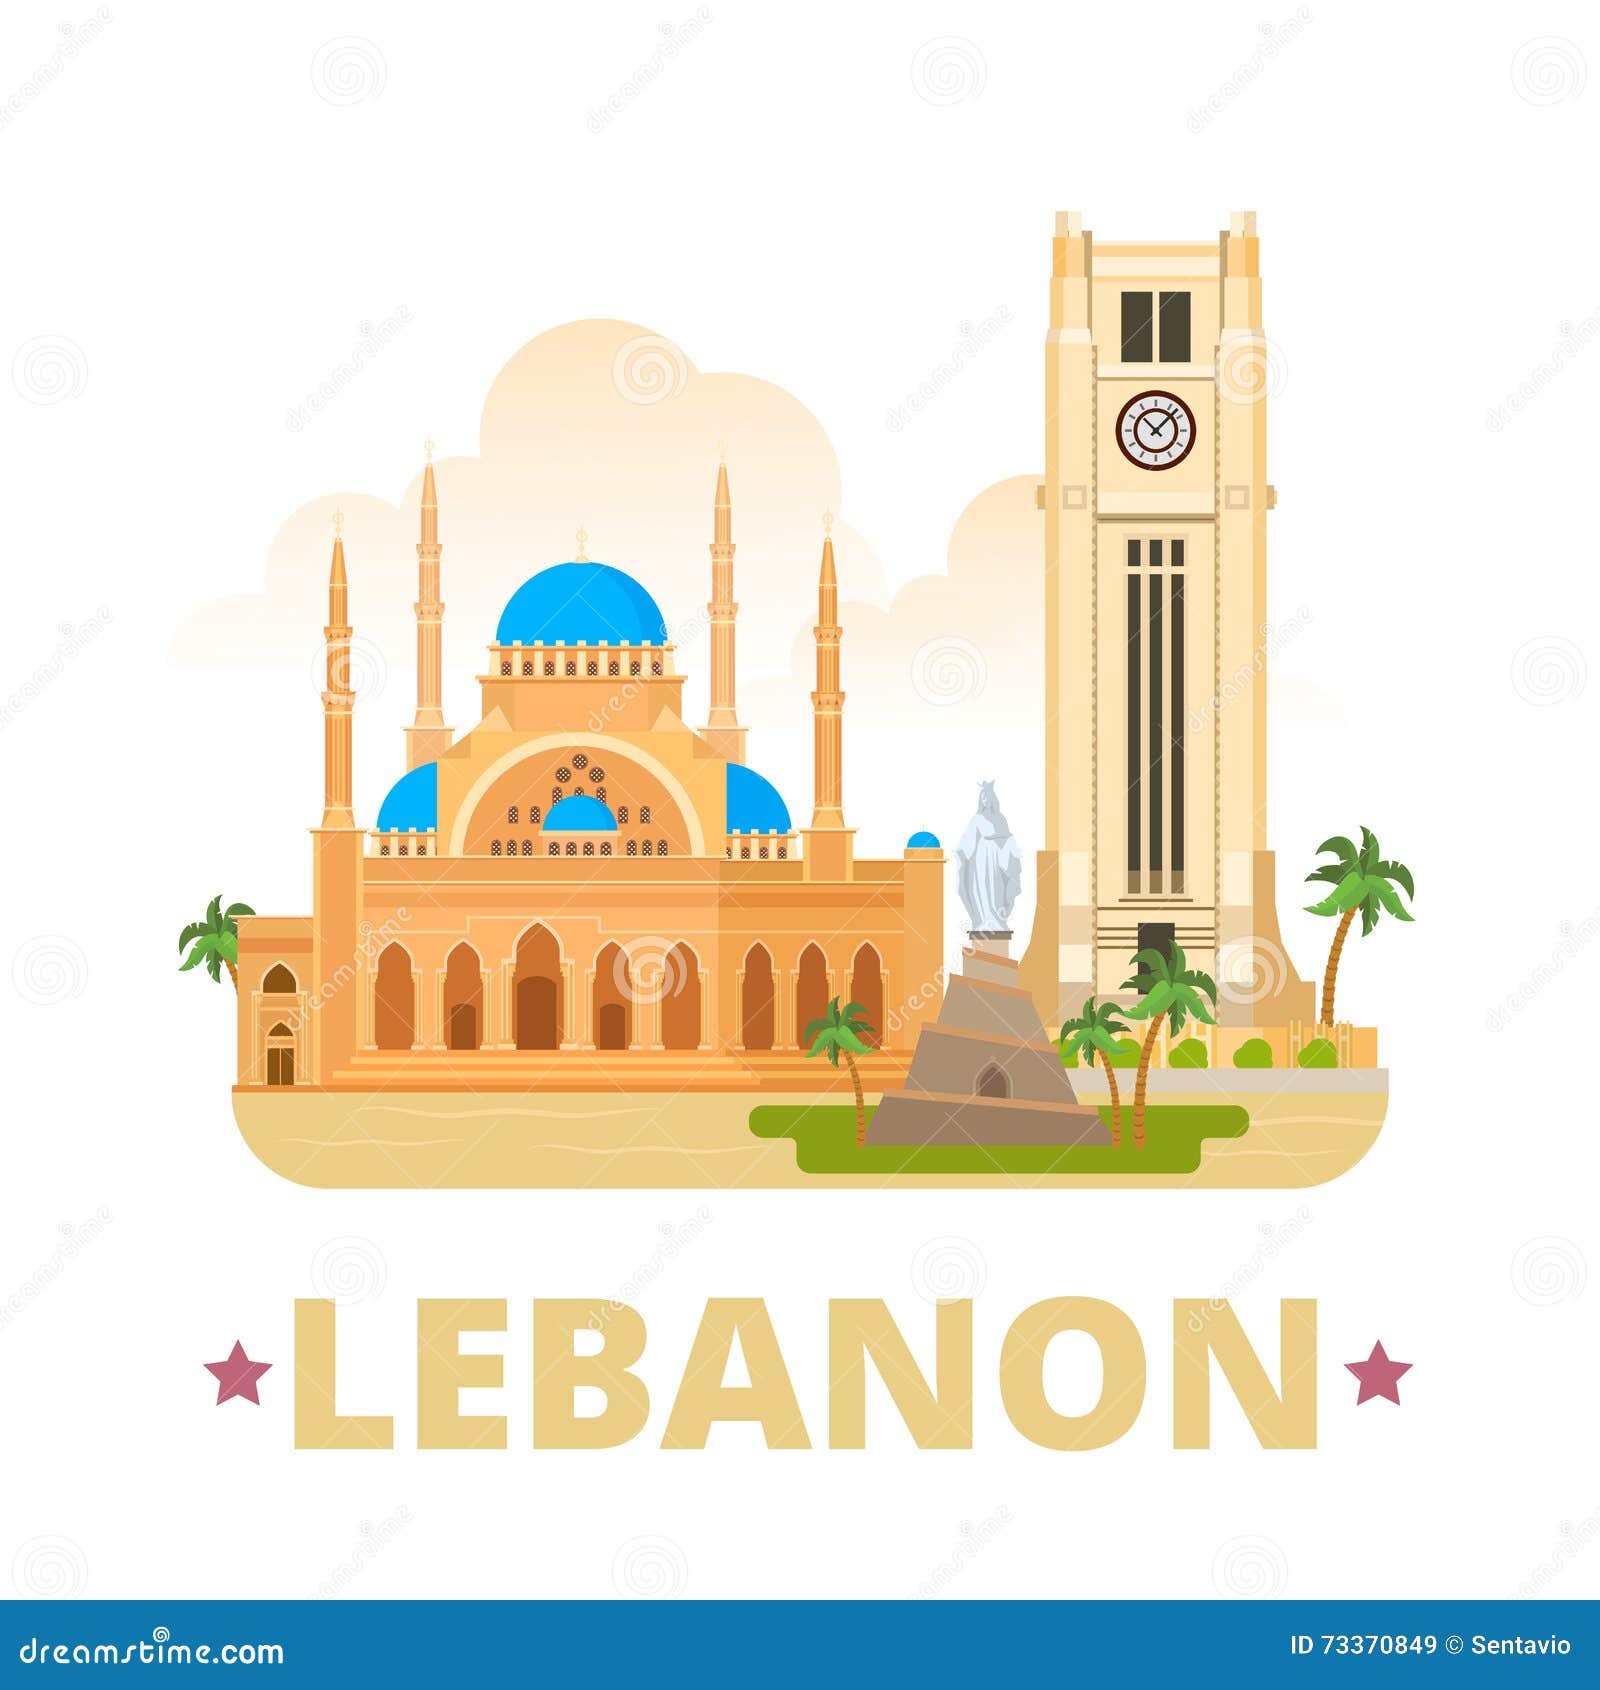 lebanon country  template flat cartoon style